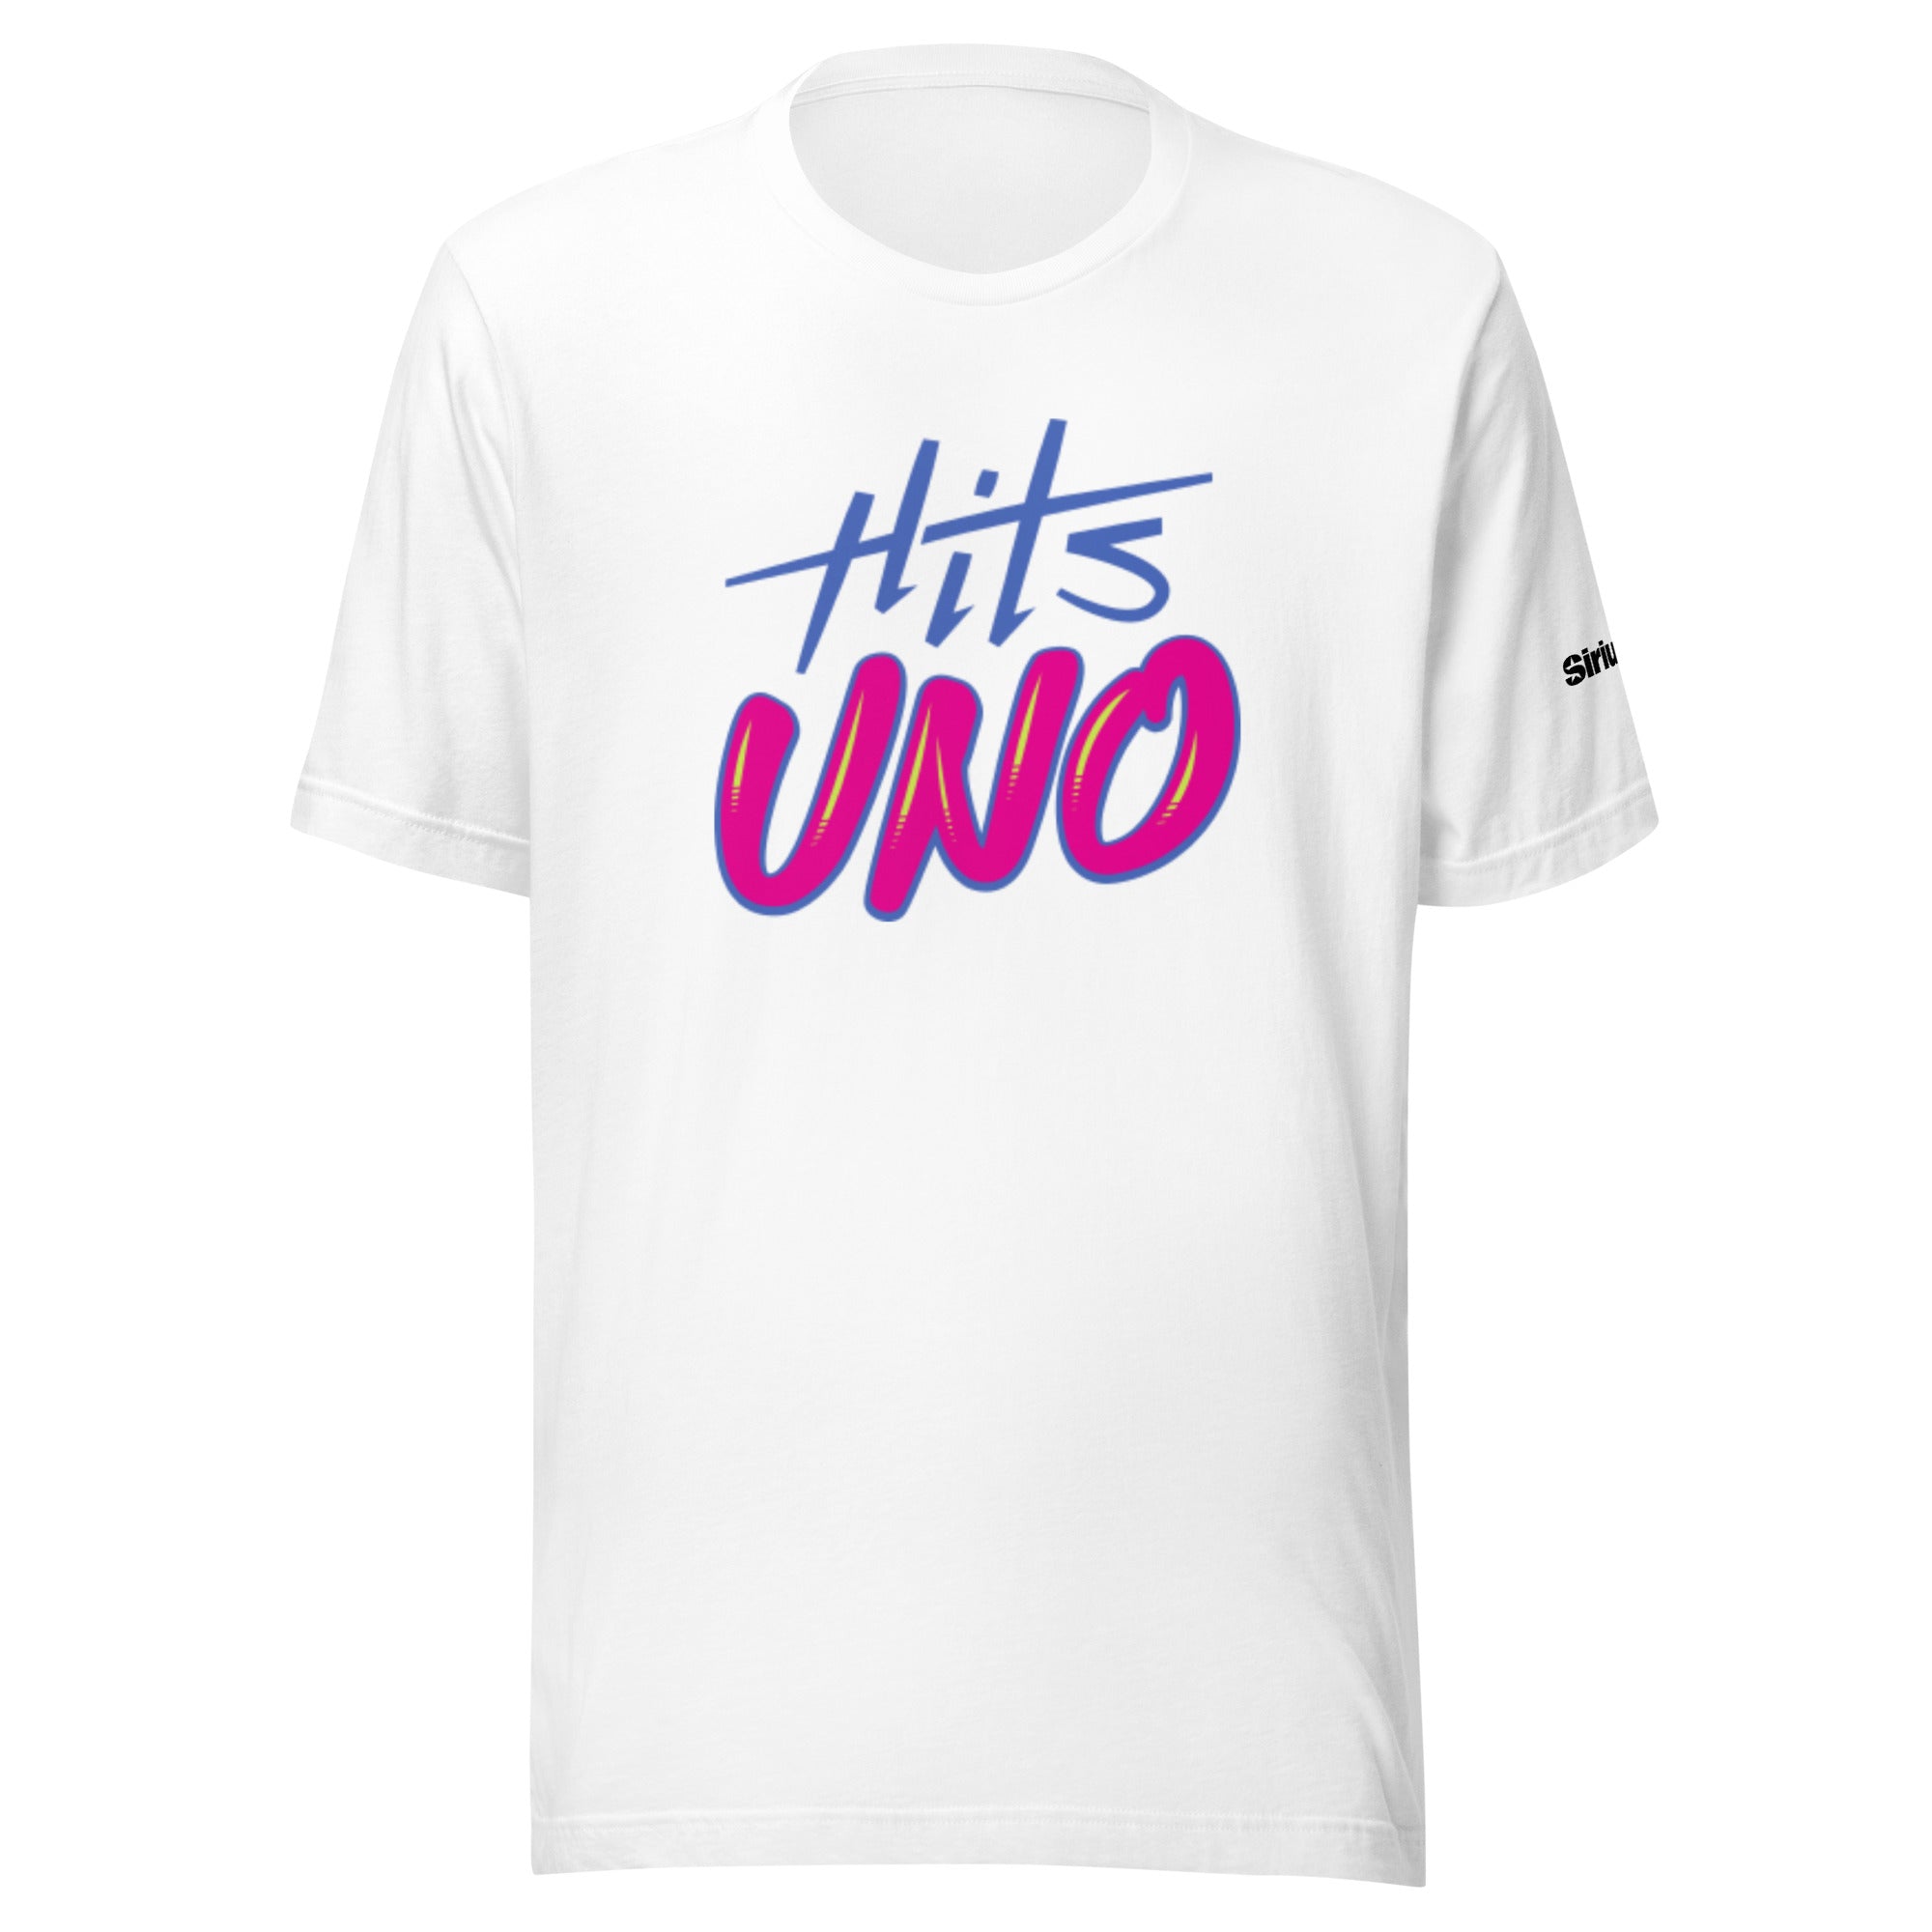 Hits Uno: White T-shirt